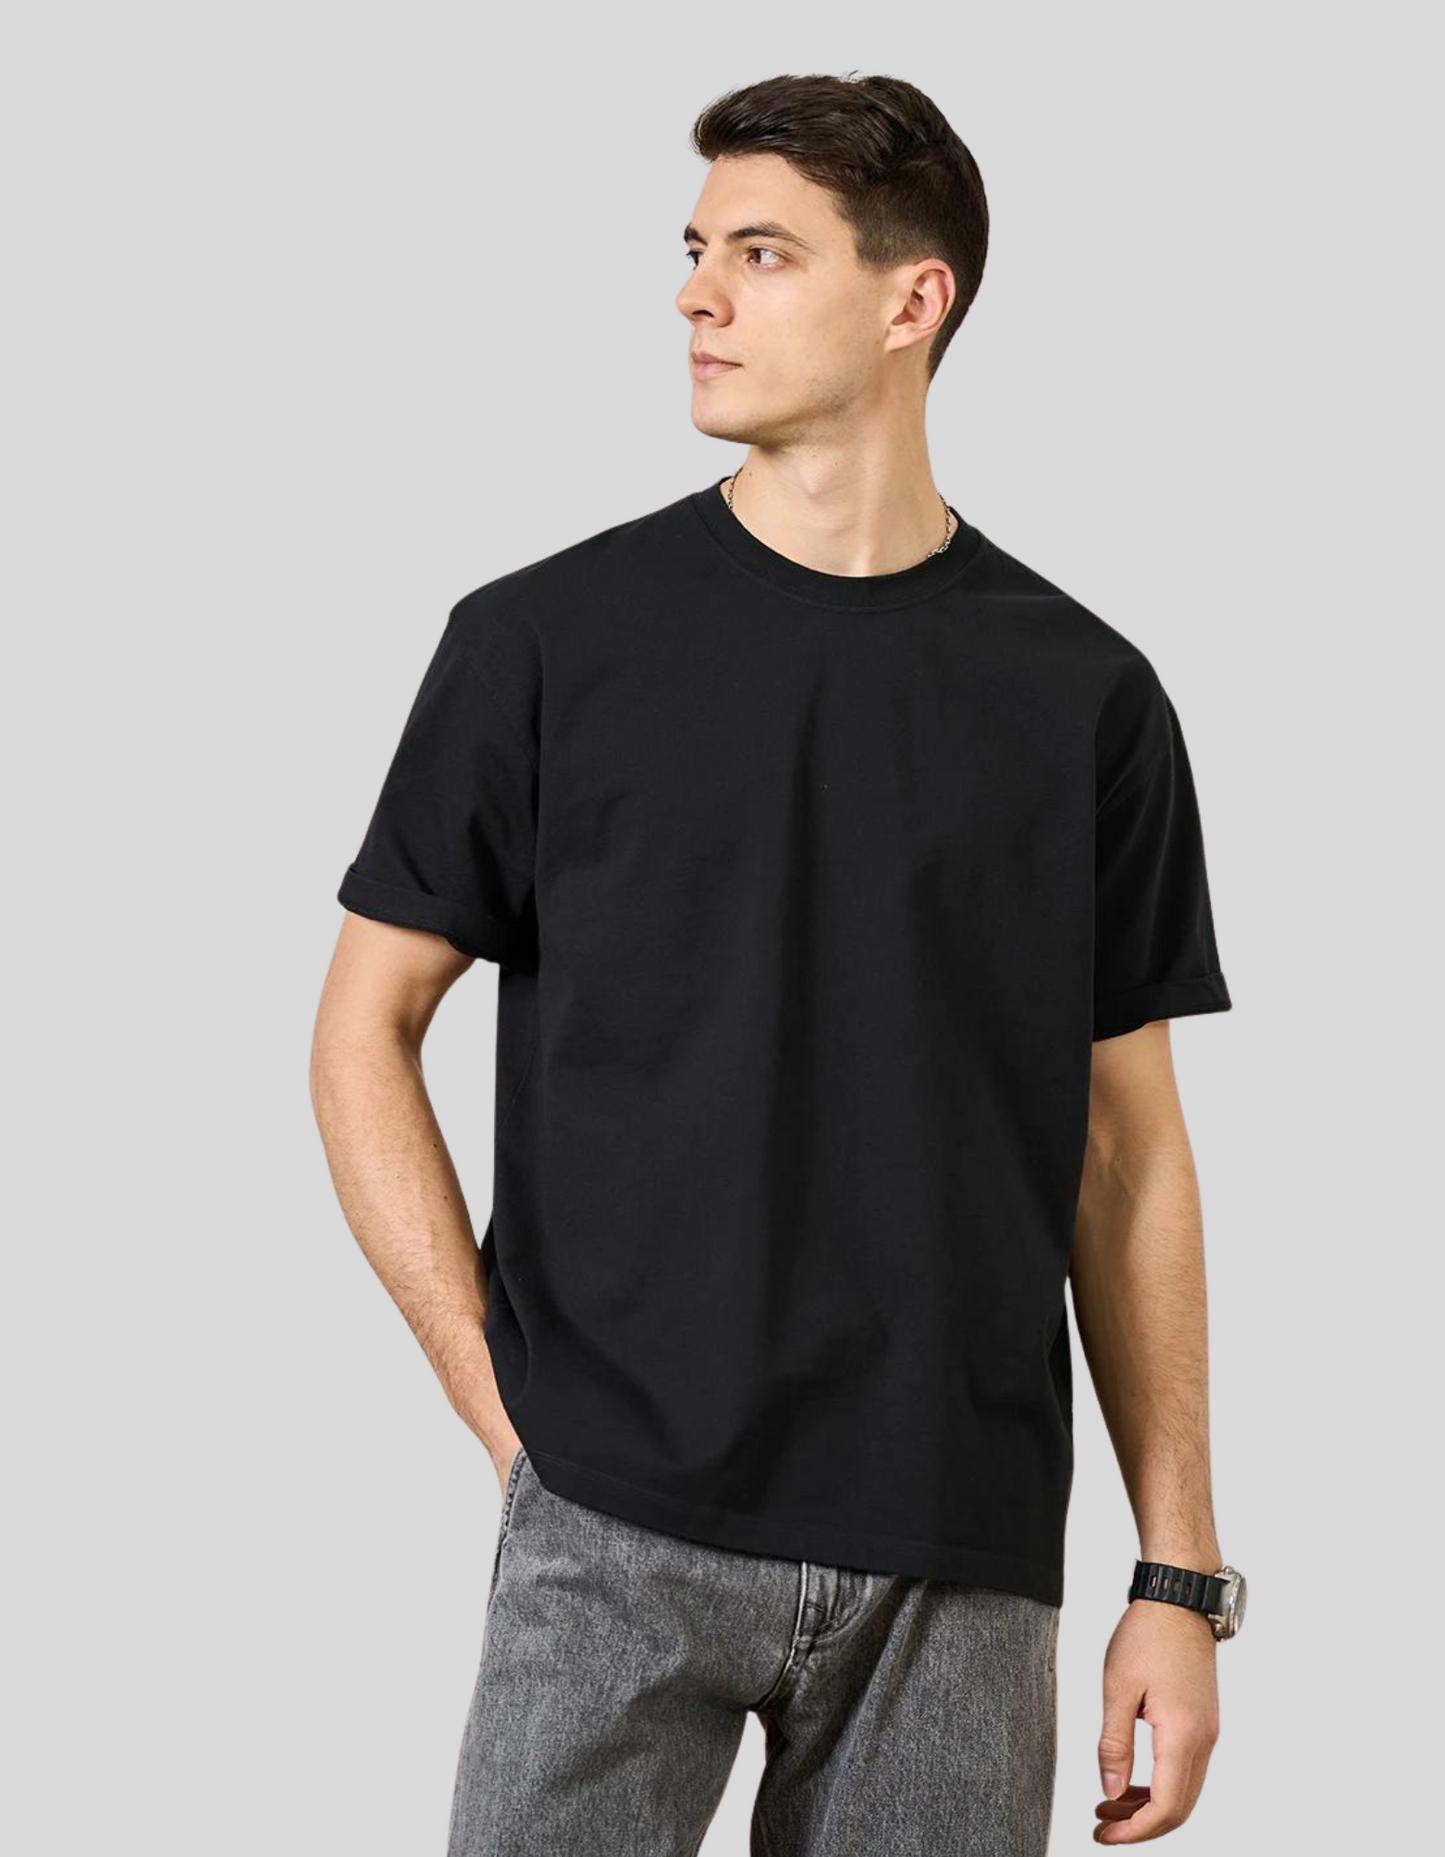 SIMWOOD Men's Charcoal Drop Sleeve 250g T-shirt 100% Cotton